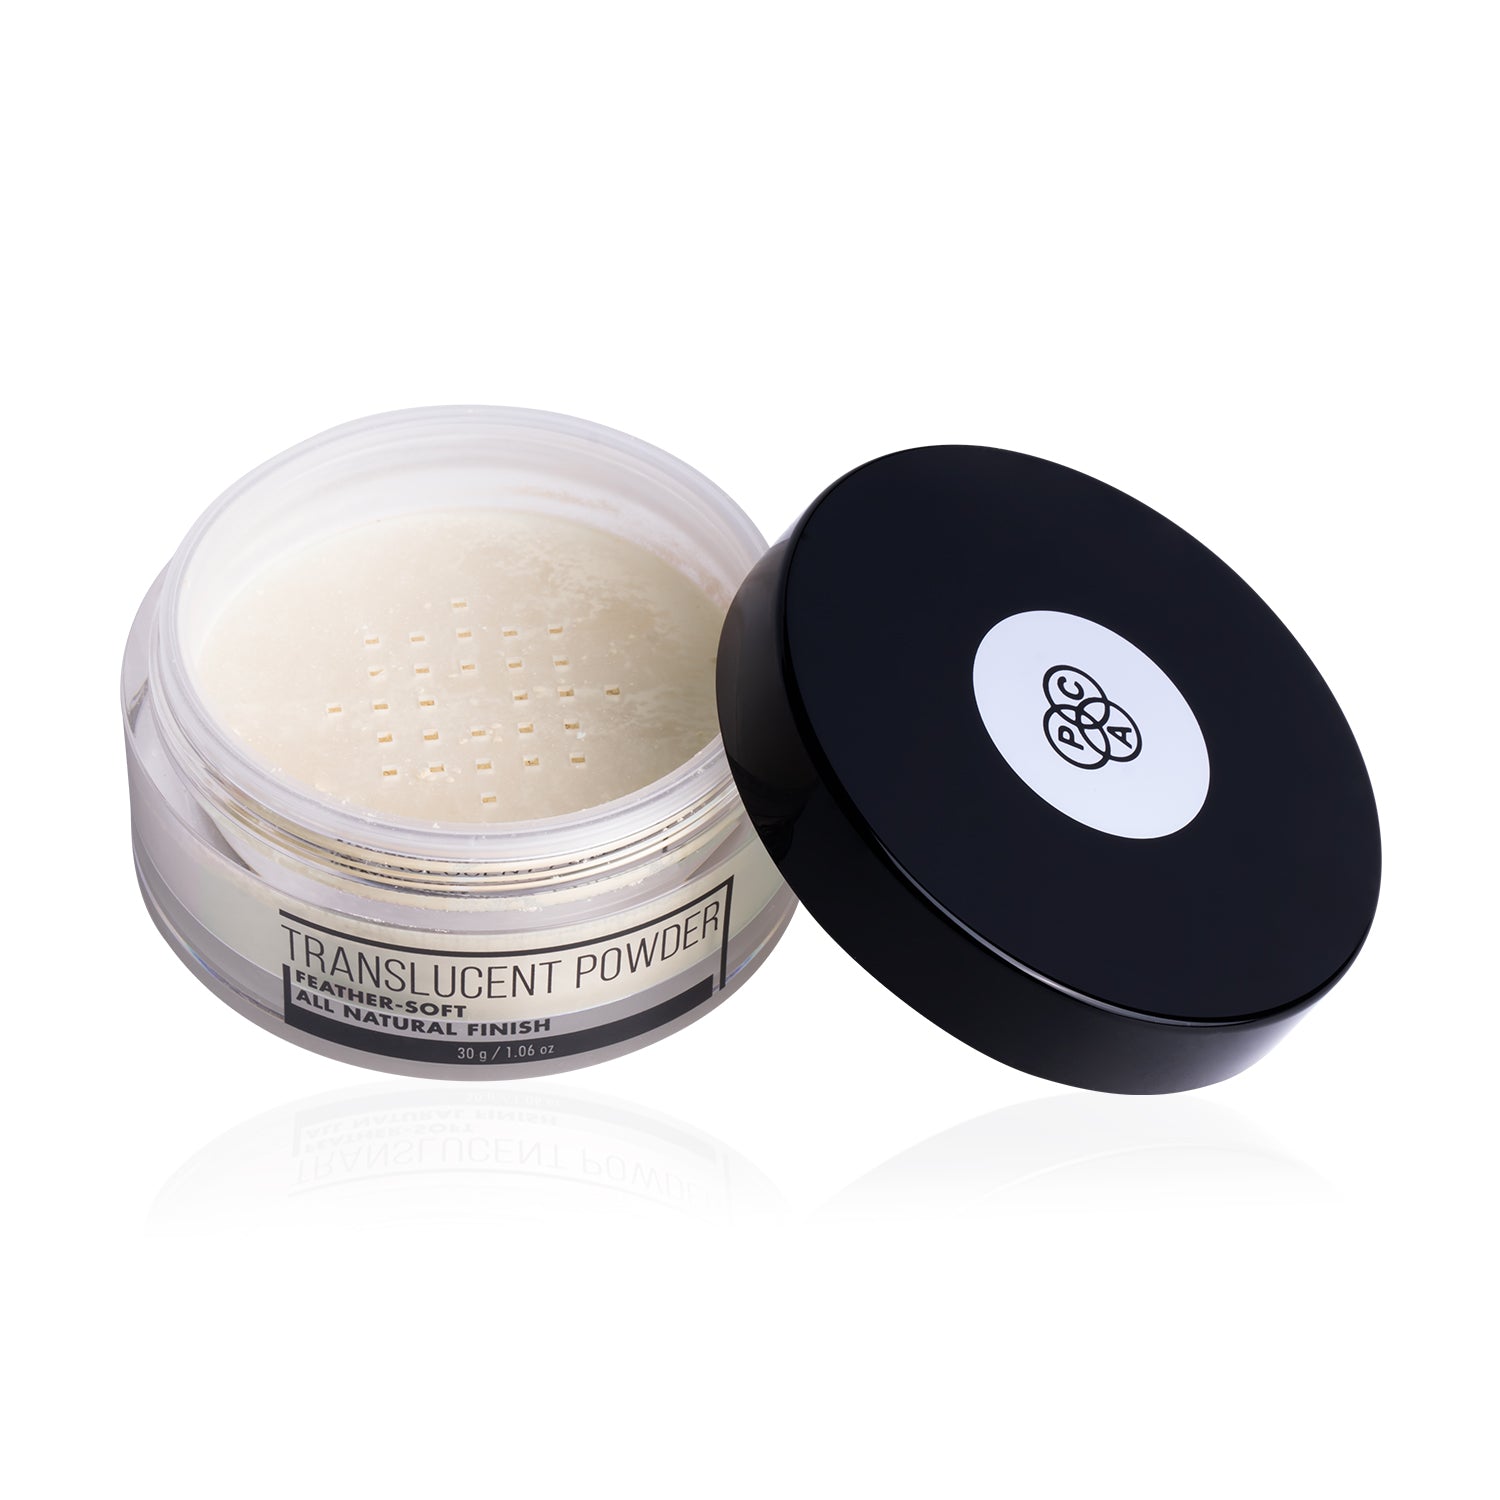 PAC Cosmetics Translucent Powder #Size_30 gm+#Color_02